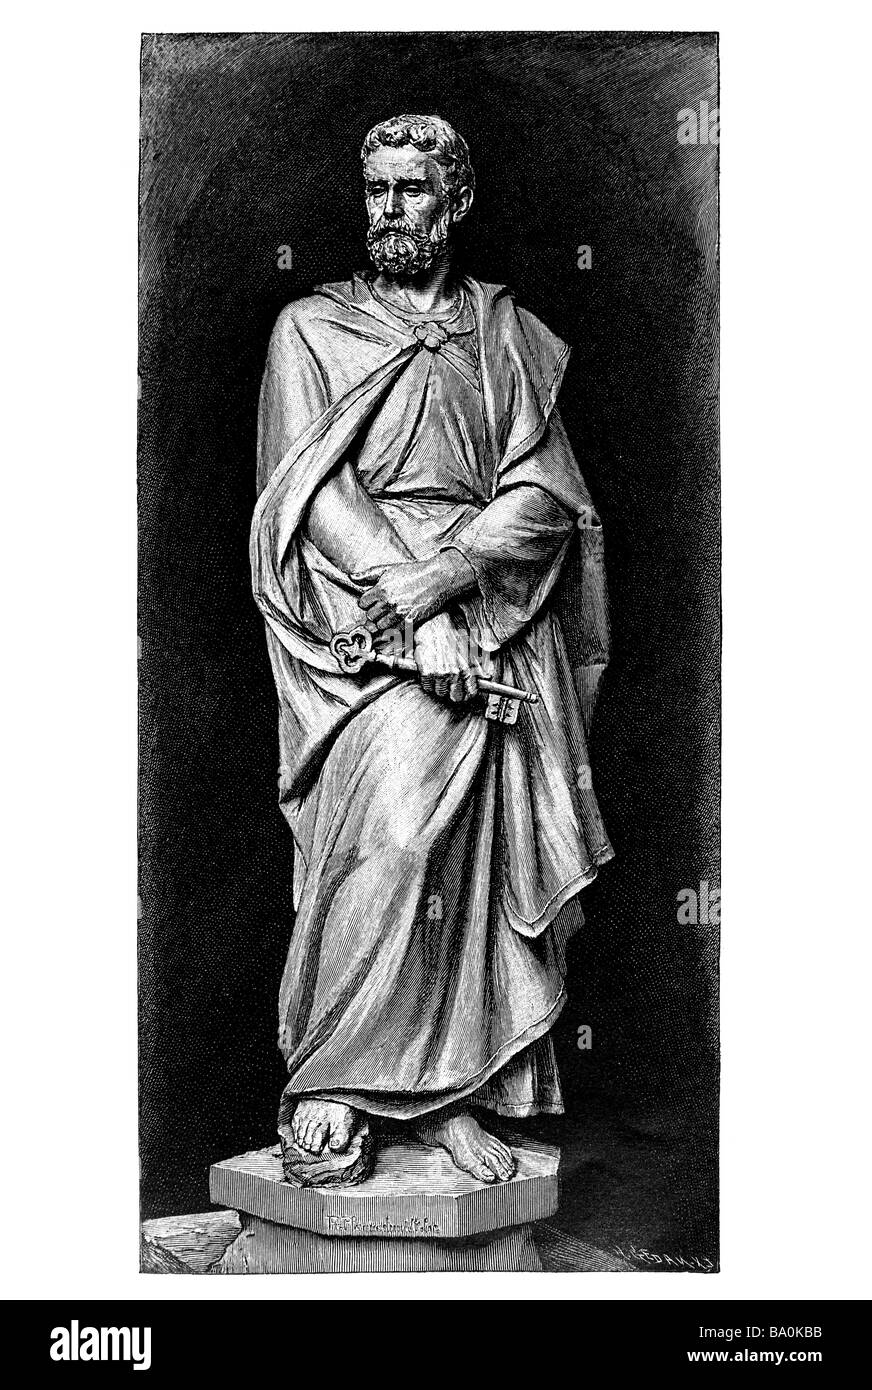 Saint Peter (Greek Petros, the Rock - (c.1–AD 64) after Pfannschmidt Stock Photo